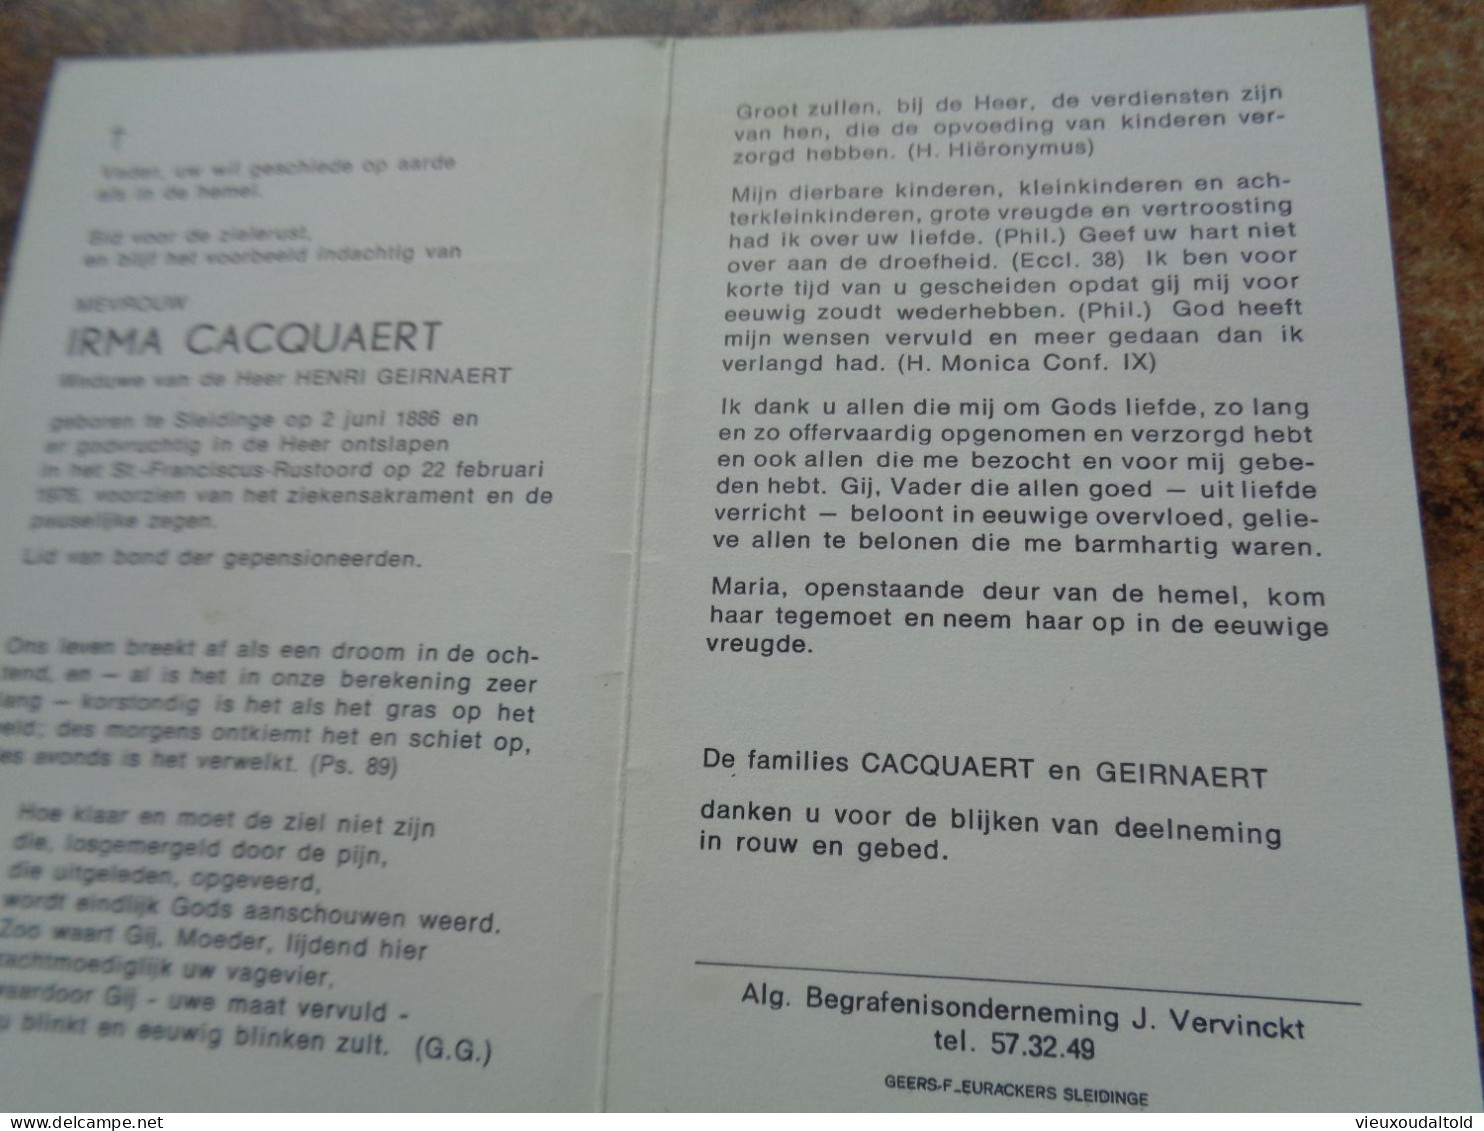 Doodsprentje/Bidprentje  IRMA CACQUAERT   Sleidinge 1886-1976  (Wwe Henri GEIRNAERT) - Religione & Esoterismo